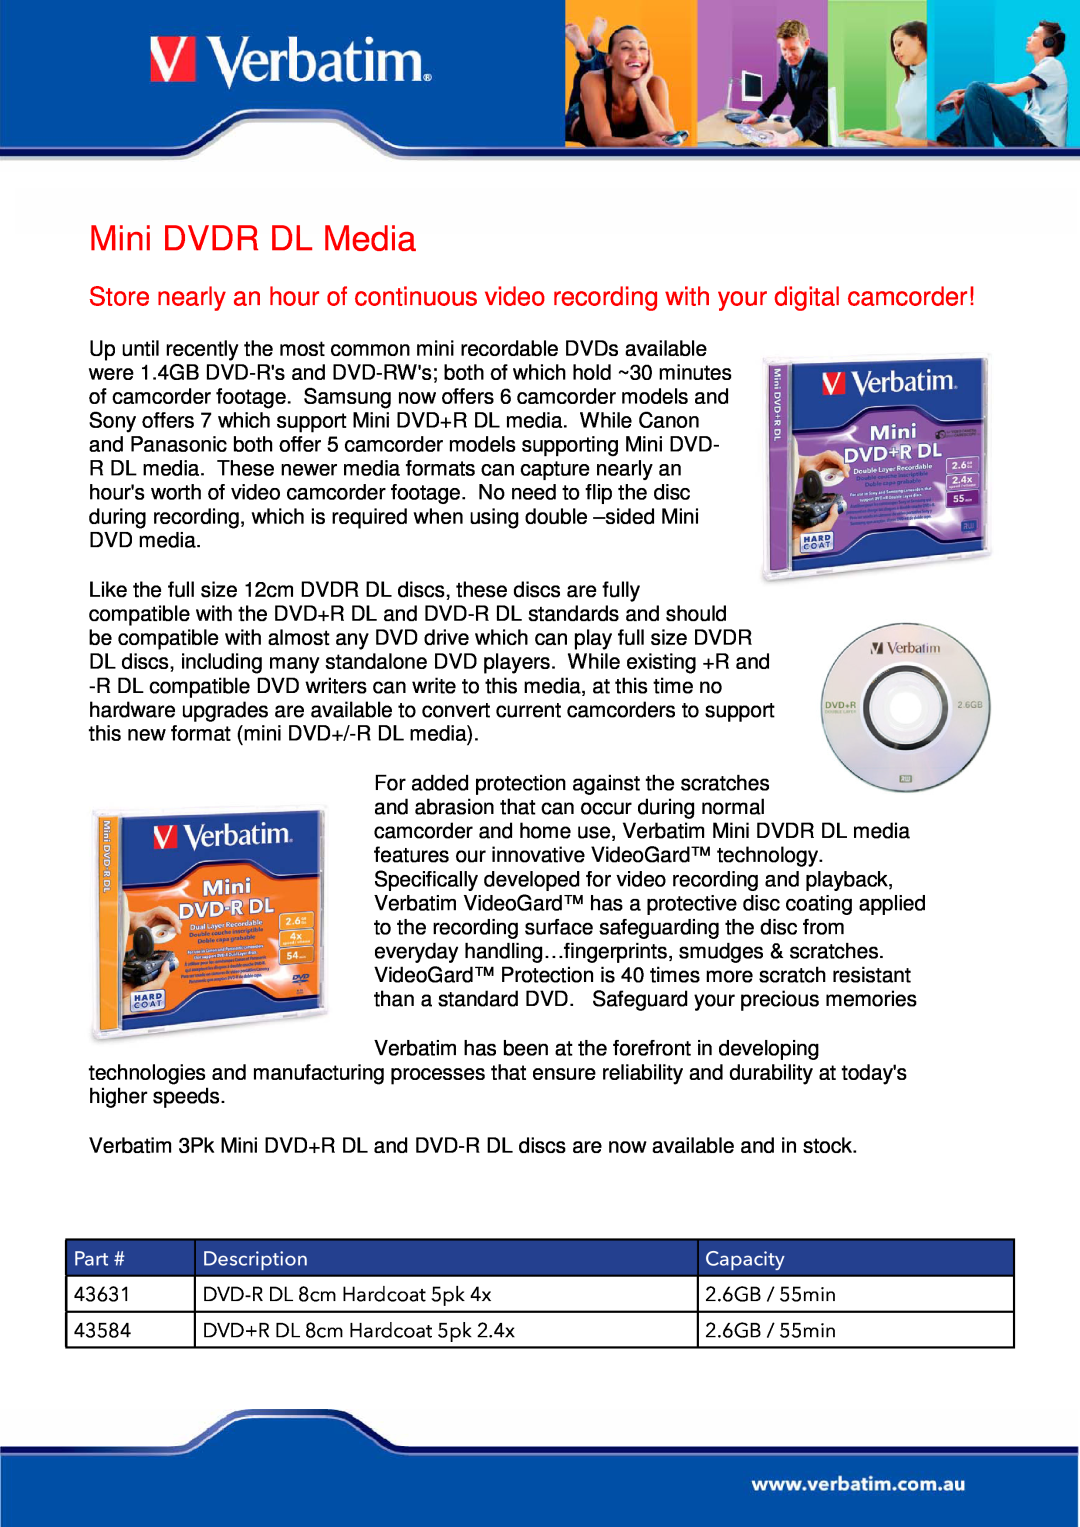 Verbatim Mini DVDR DL Media manual Description, Capacity 